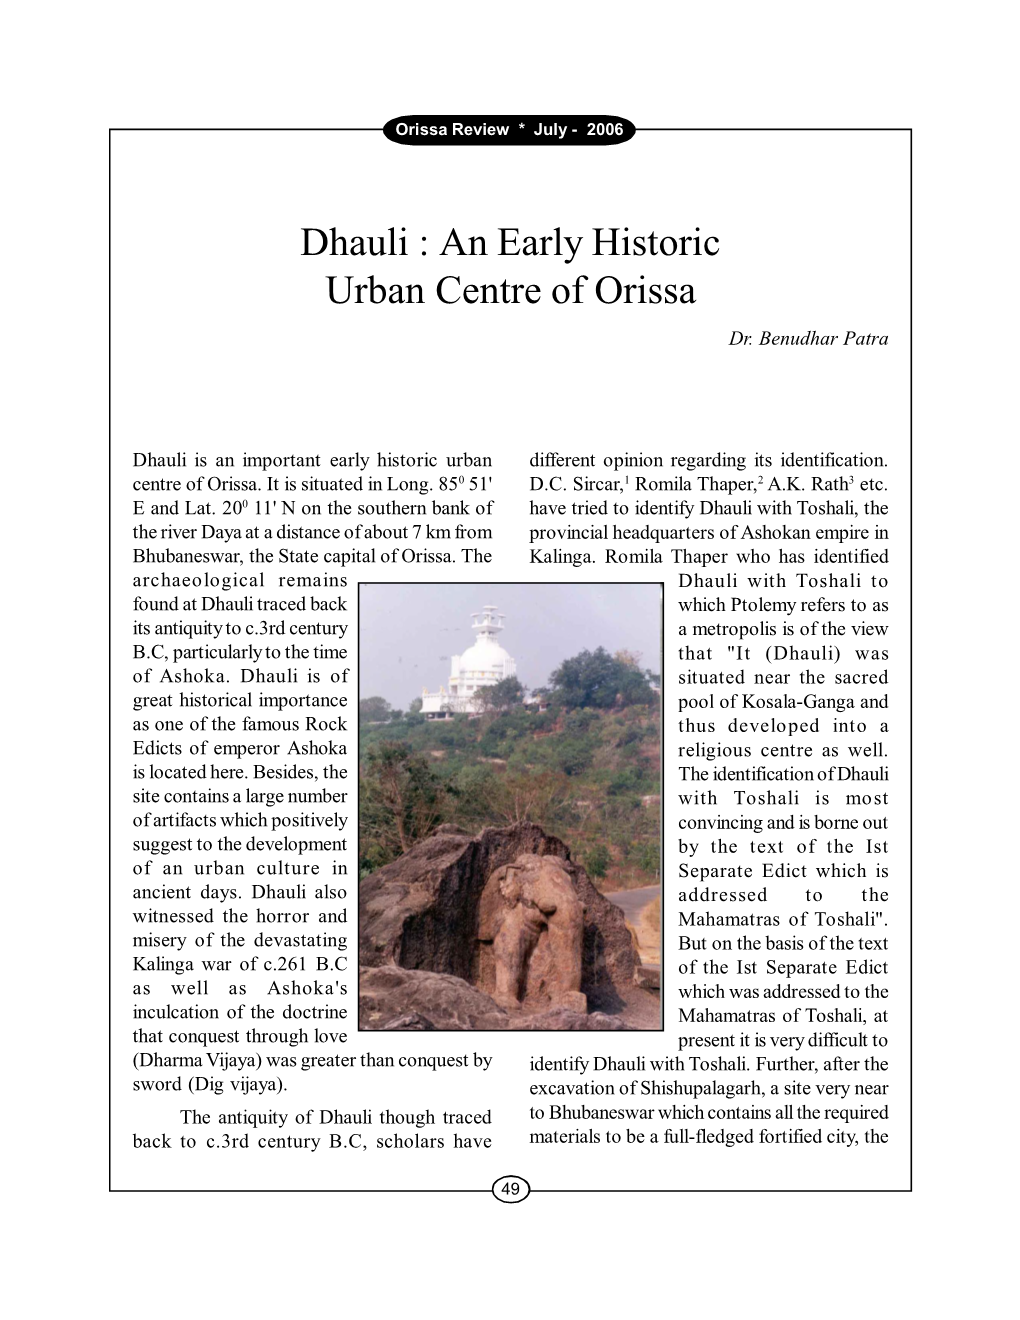 Dhauli : an Early Historic Urban Centre of Orissa Dr